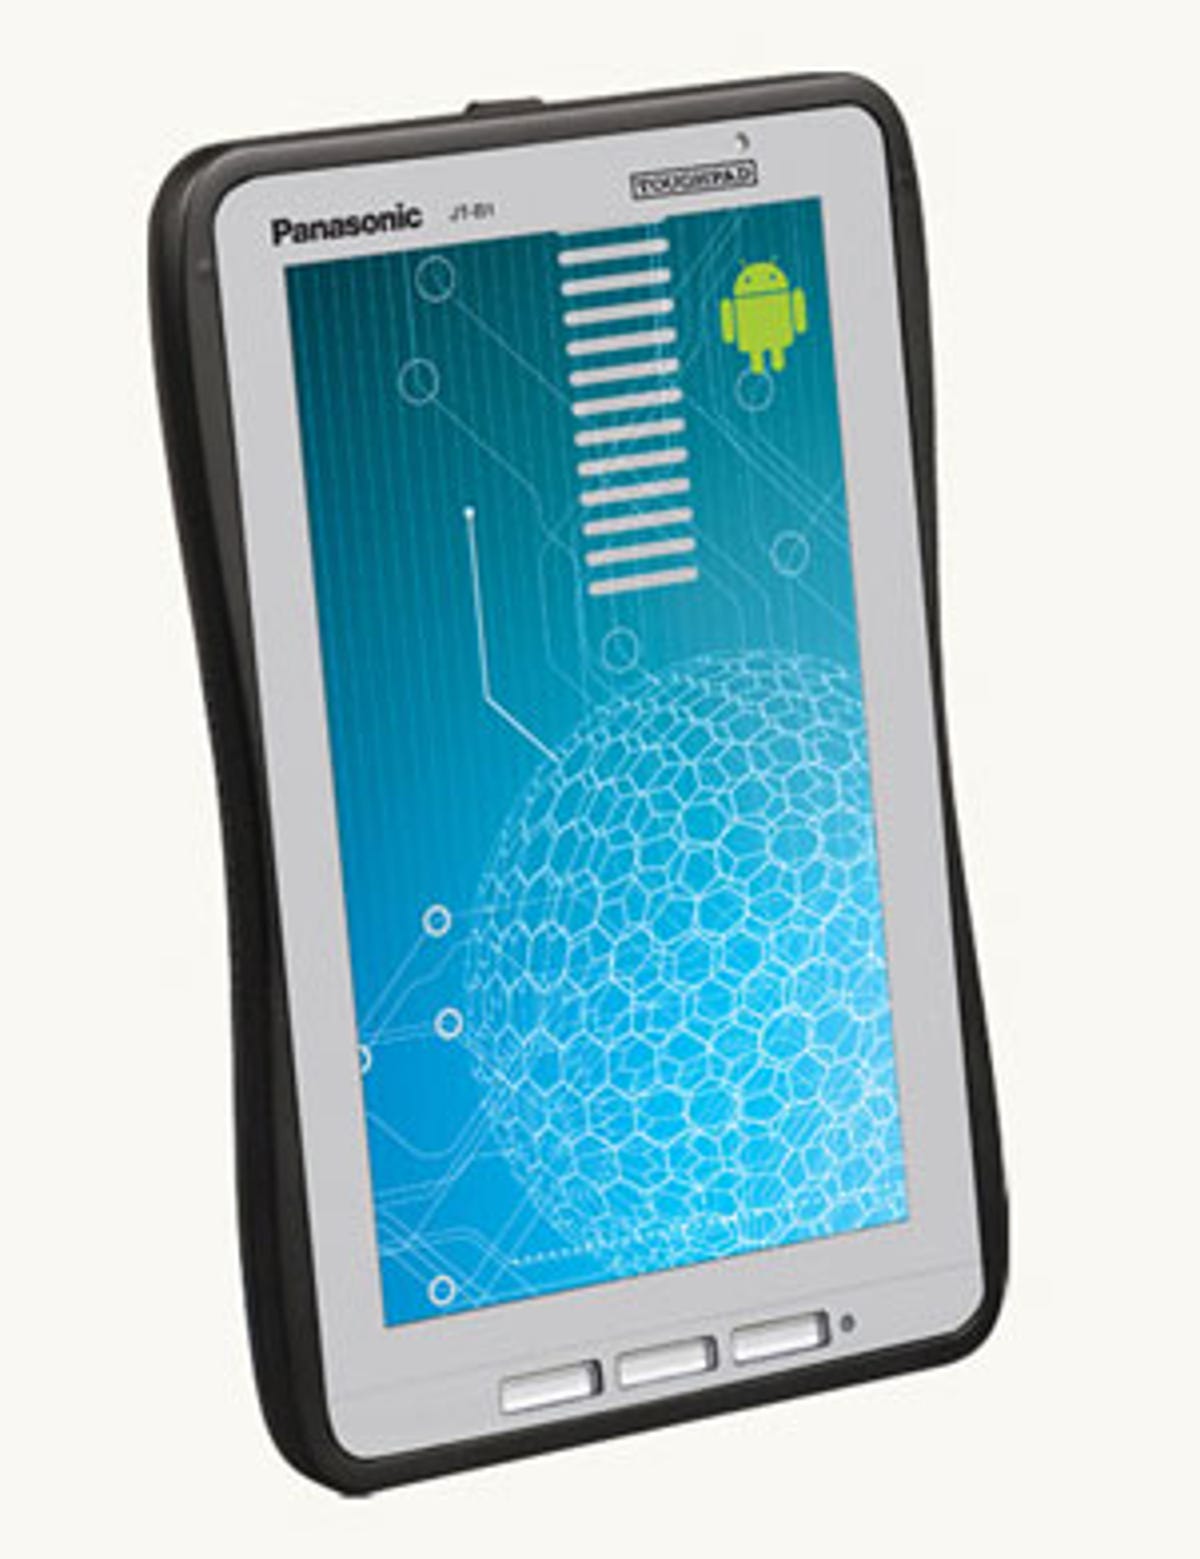 The 7-inch Panasonic Touchpad B1